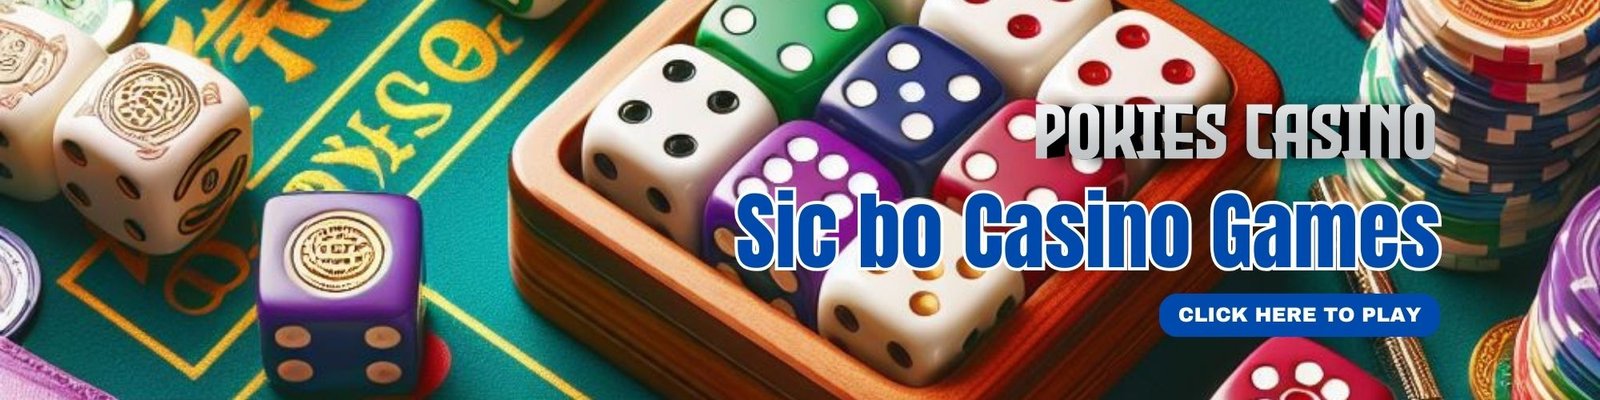 Sic bo Casino Games